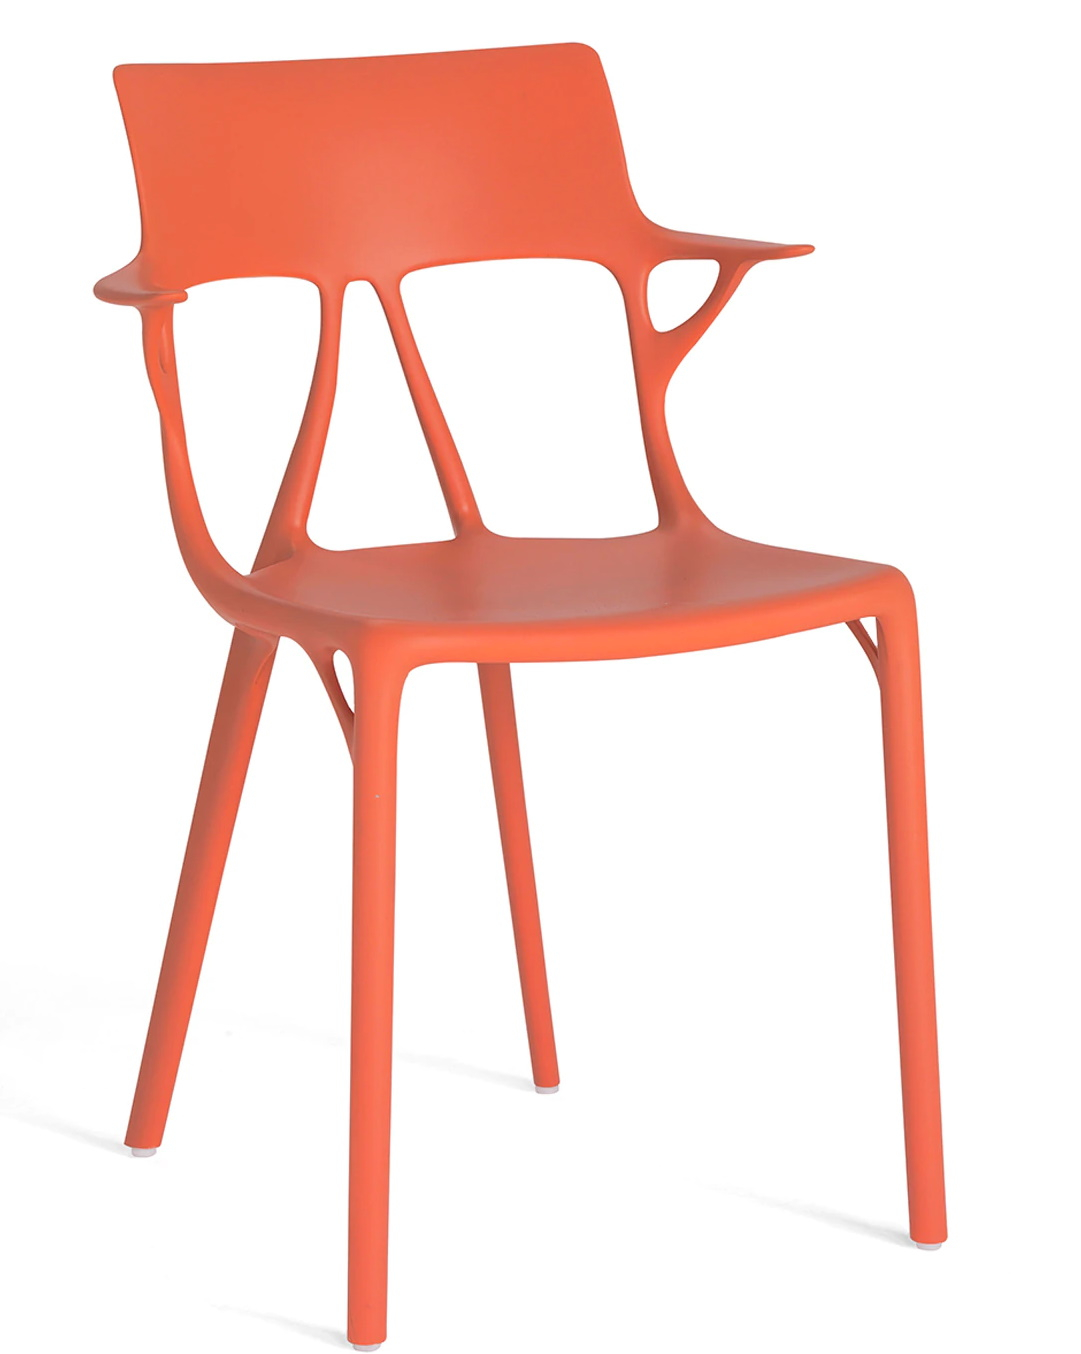 Scaun Kartell A.I. design Philippe Starck portocaliu Kartell imagine reduss.ro 2022